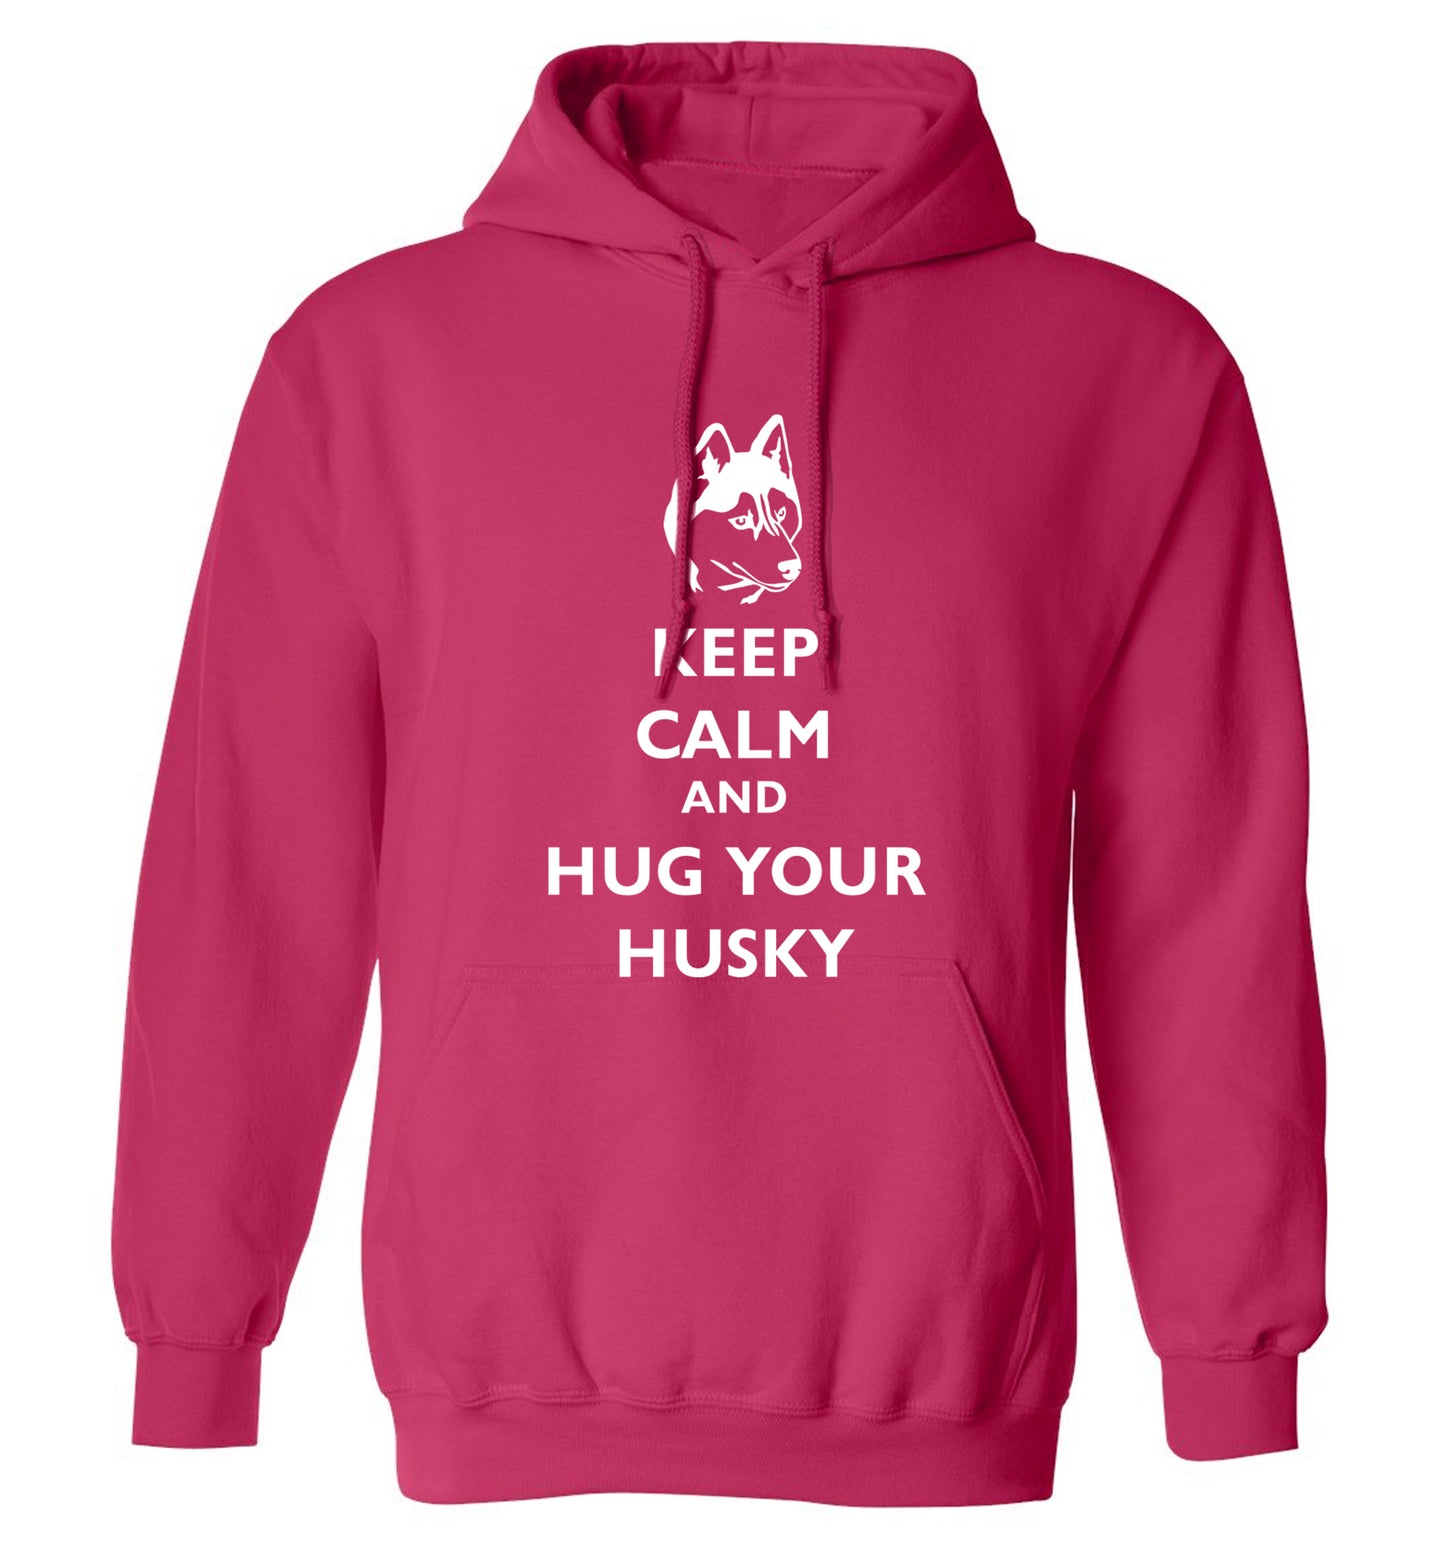 Keep calm and hug your husky adults unisex pink hoodie 2XL